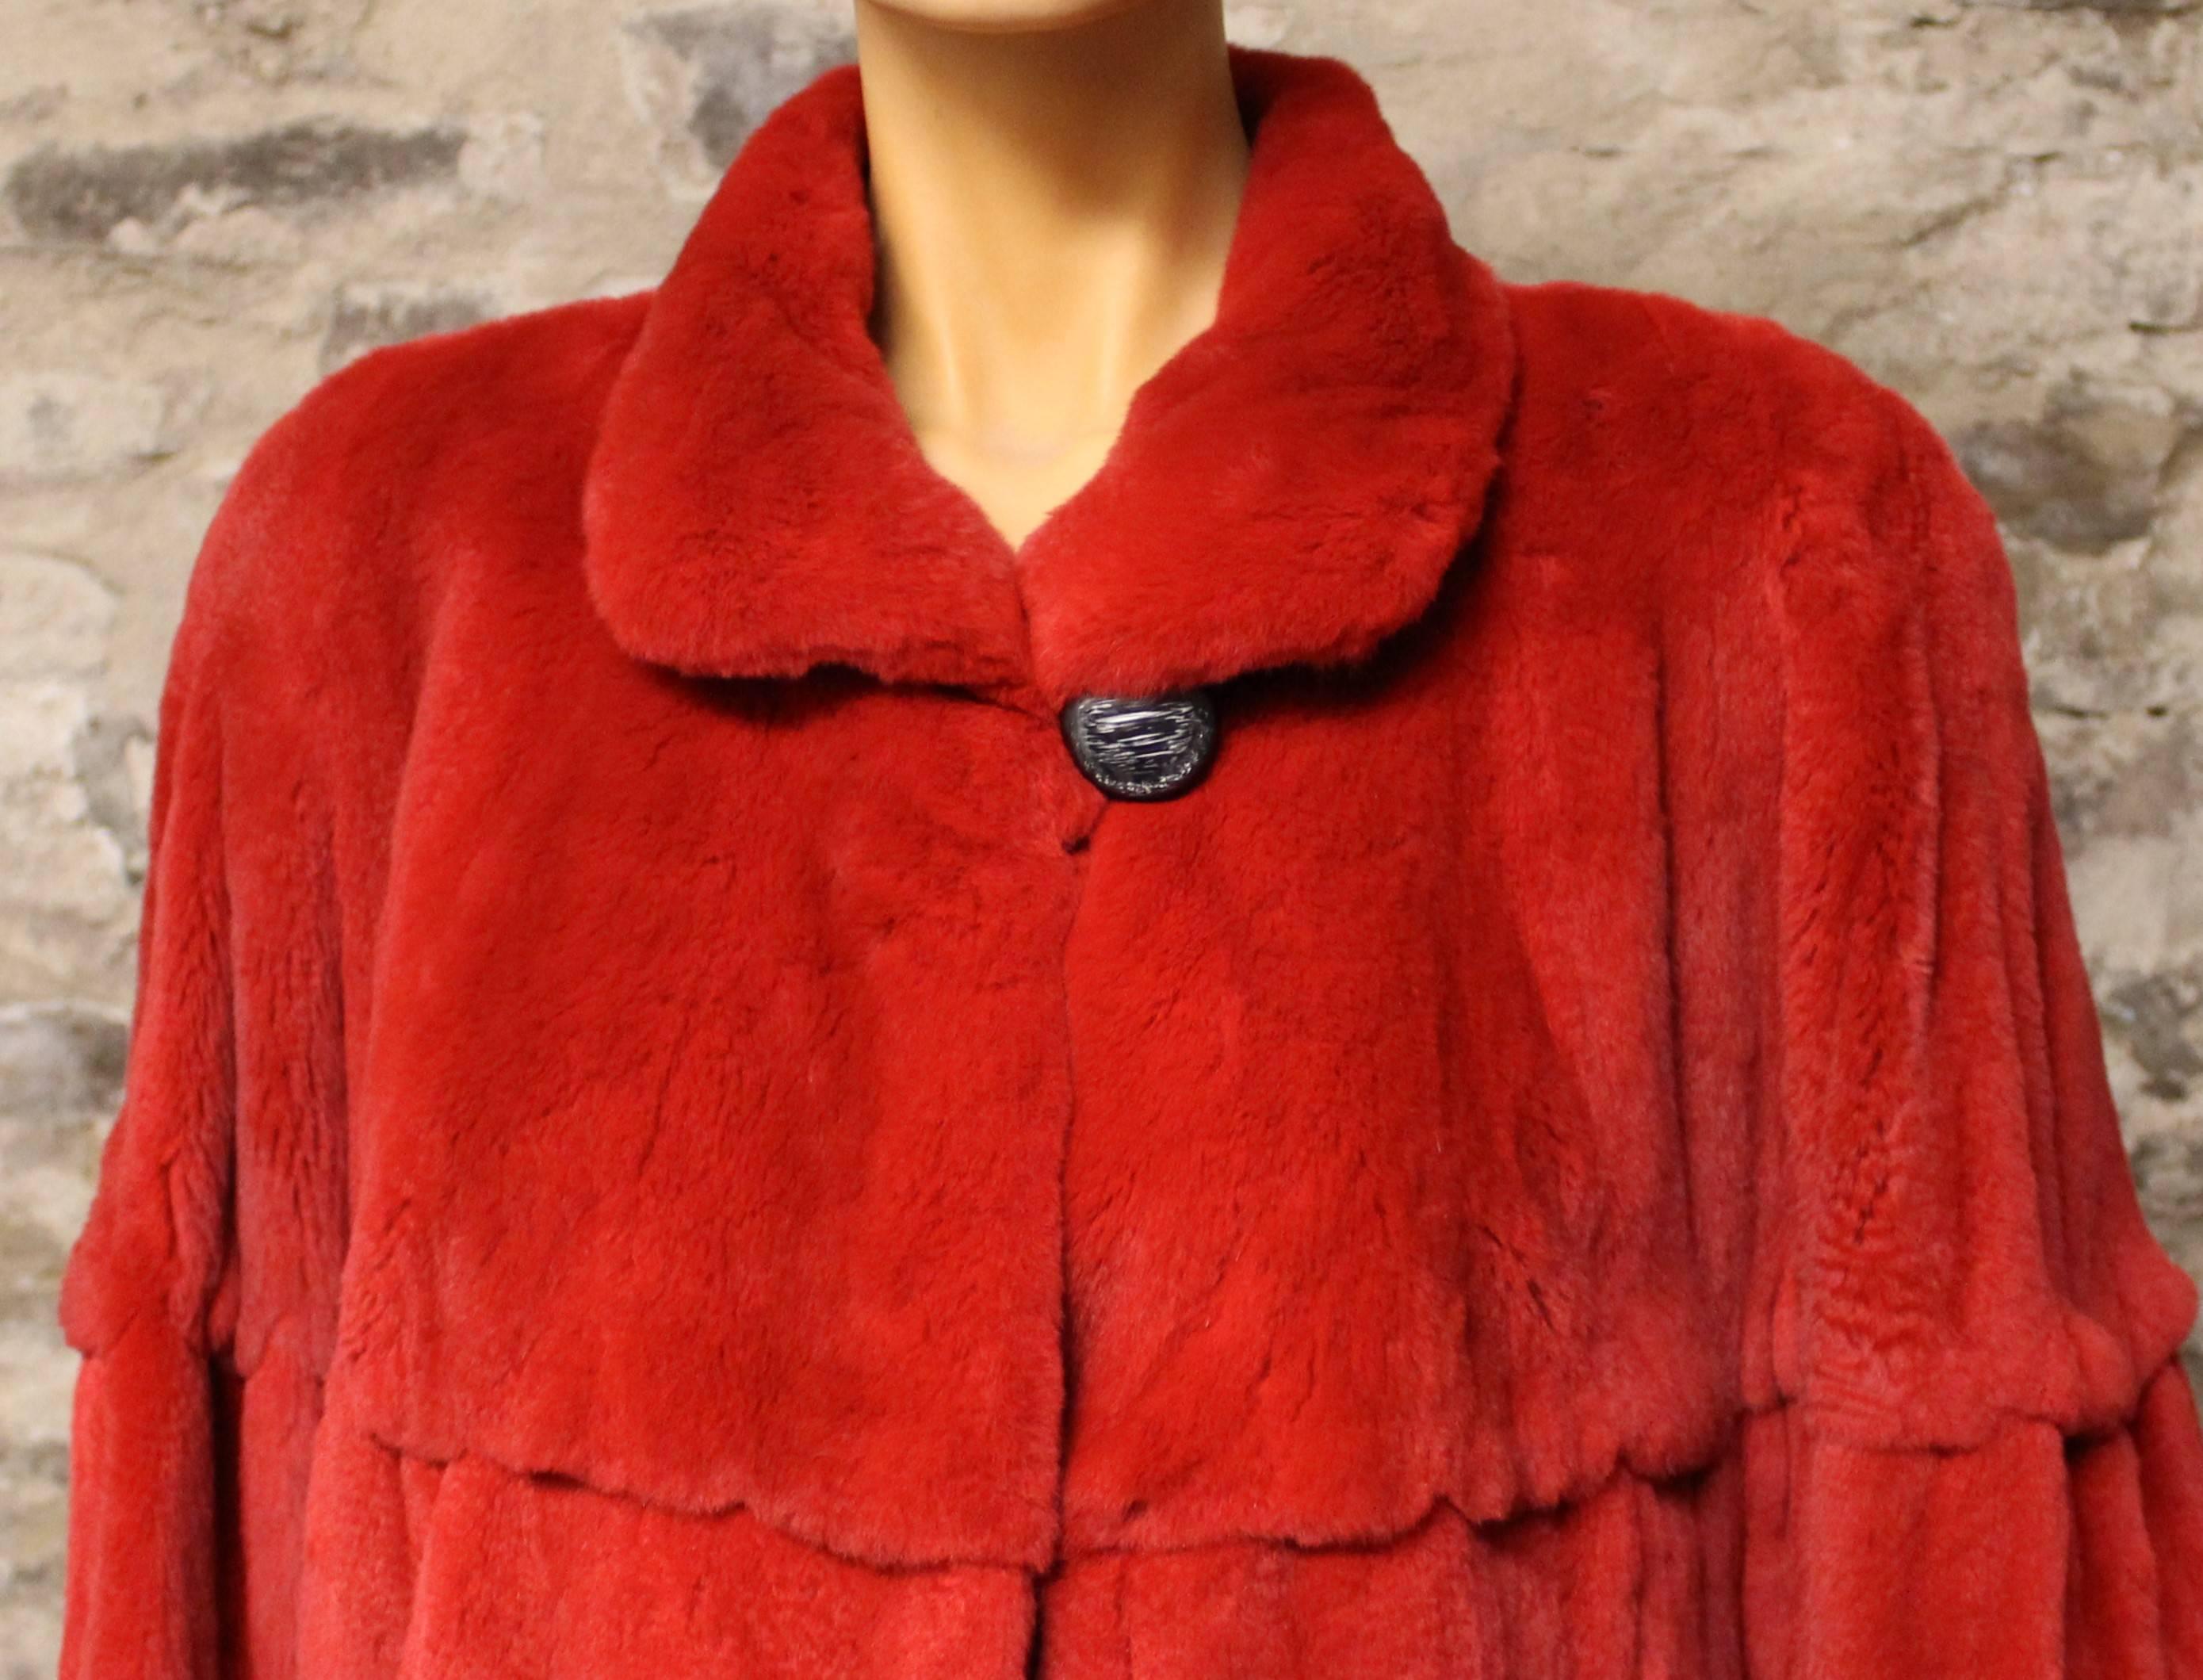 Sable Fur Coat by Birger Christensen In Good Condition For Sale In Hamilton, Ontario